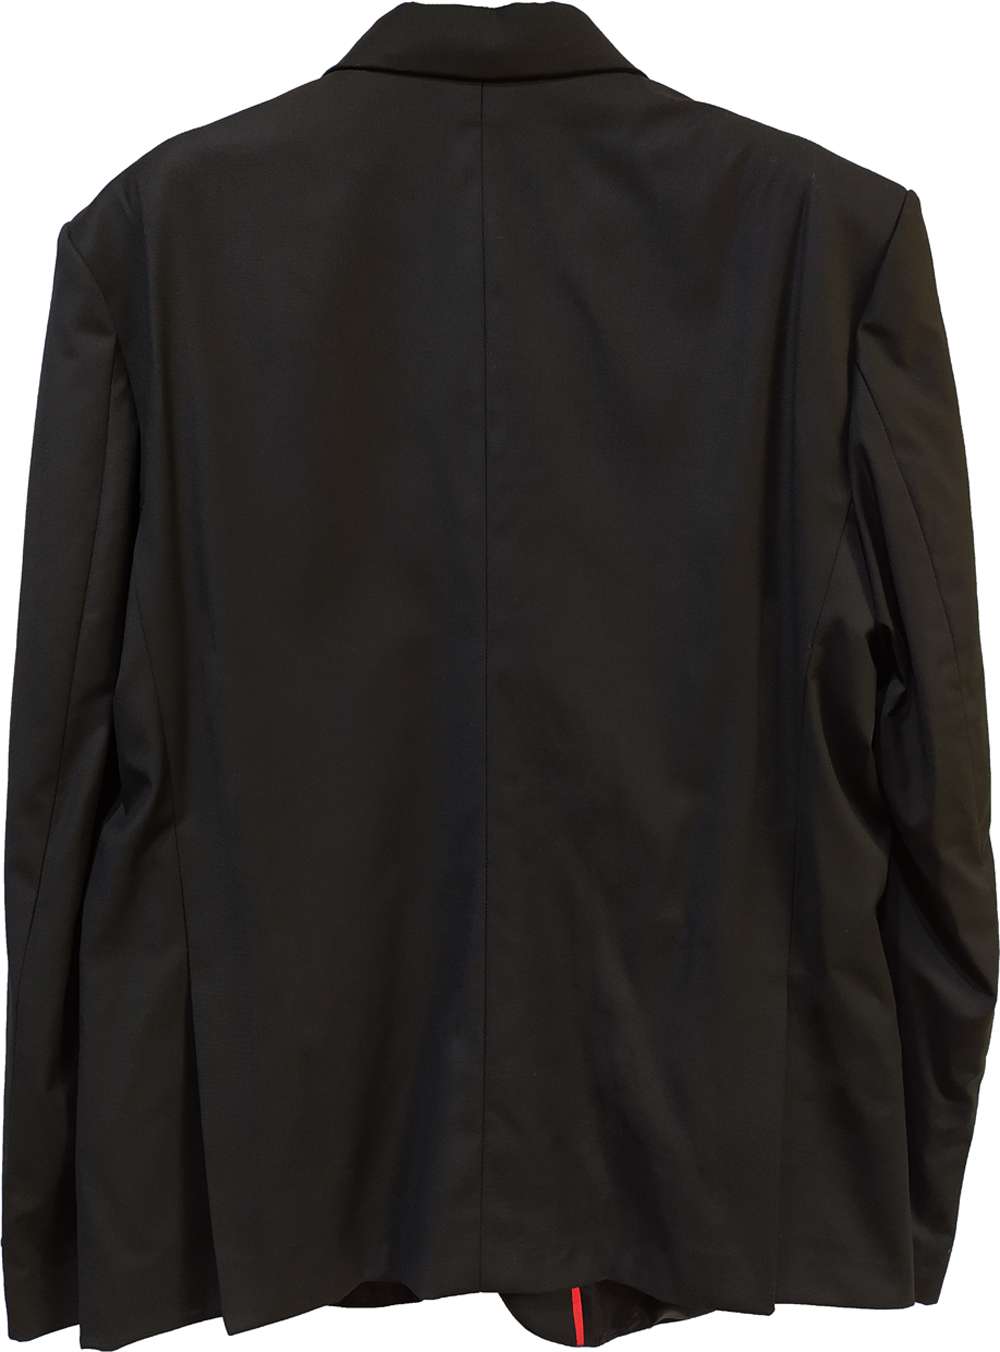 Premium Black Plus Size Blazer - Plus Size Garments